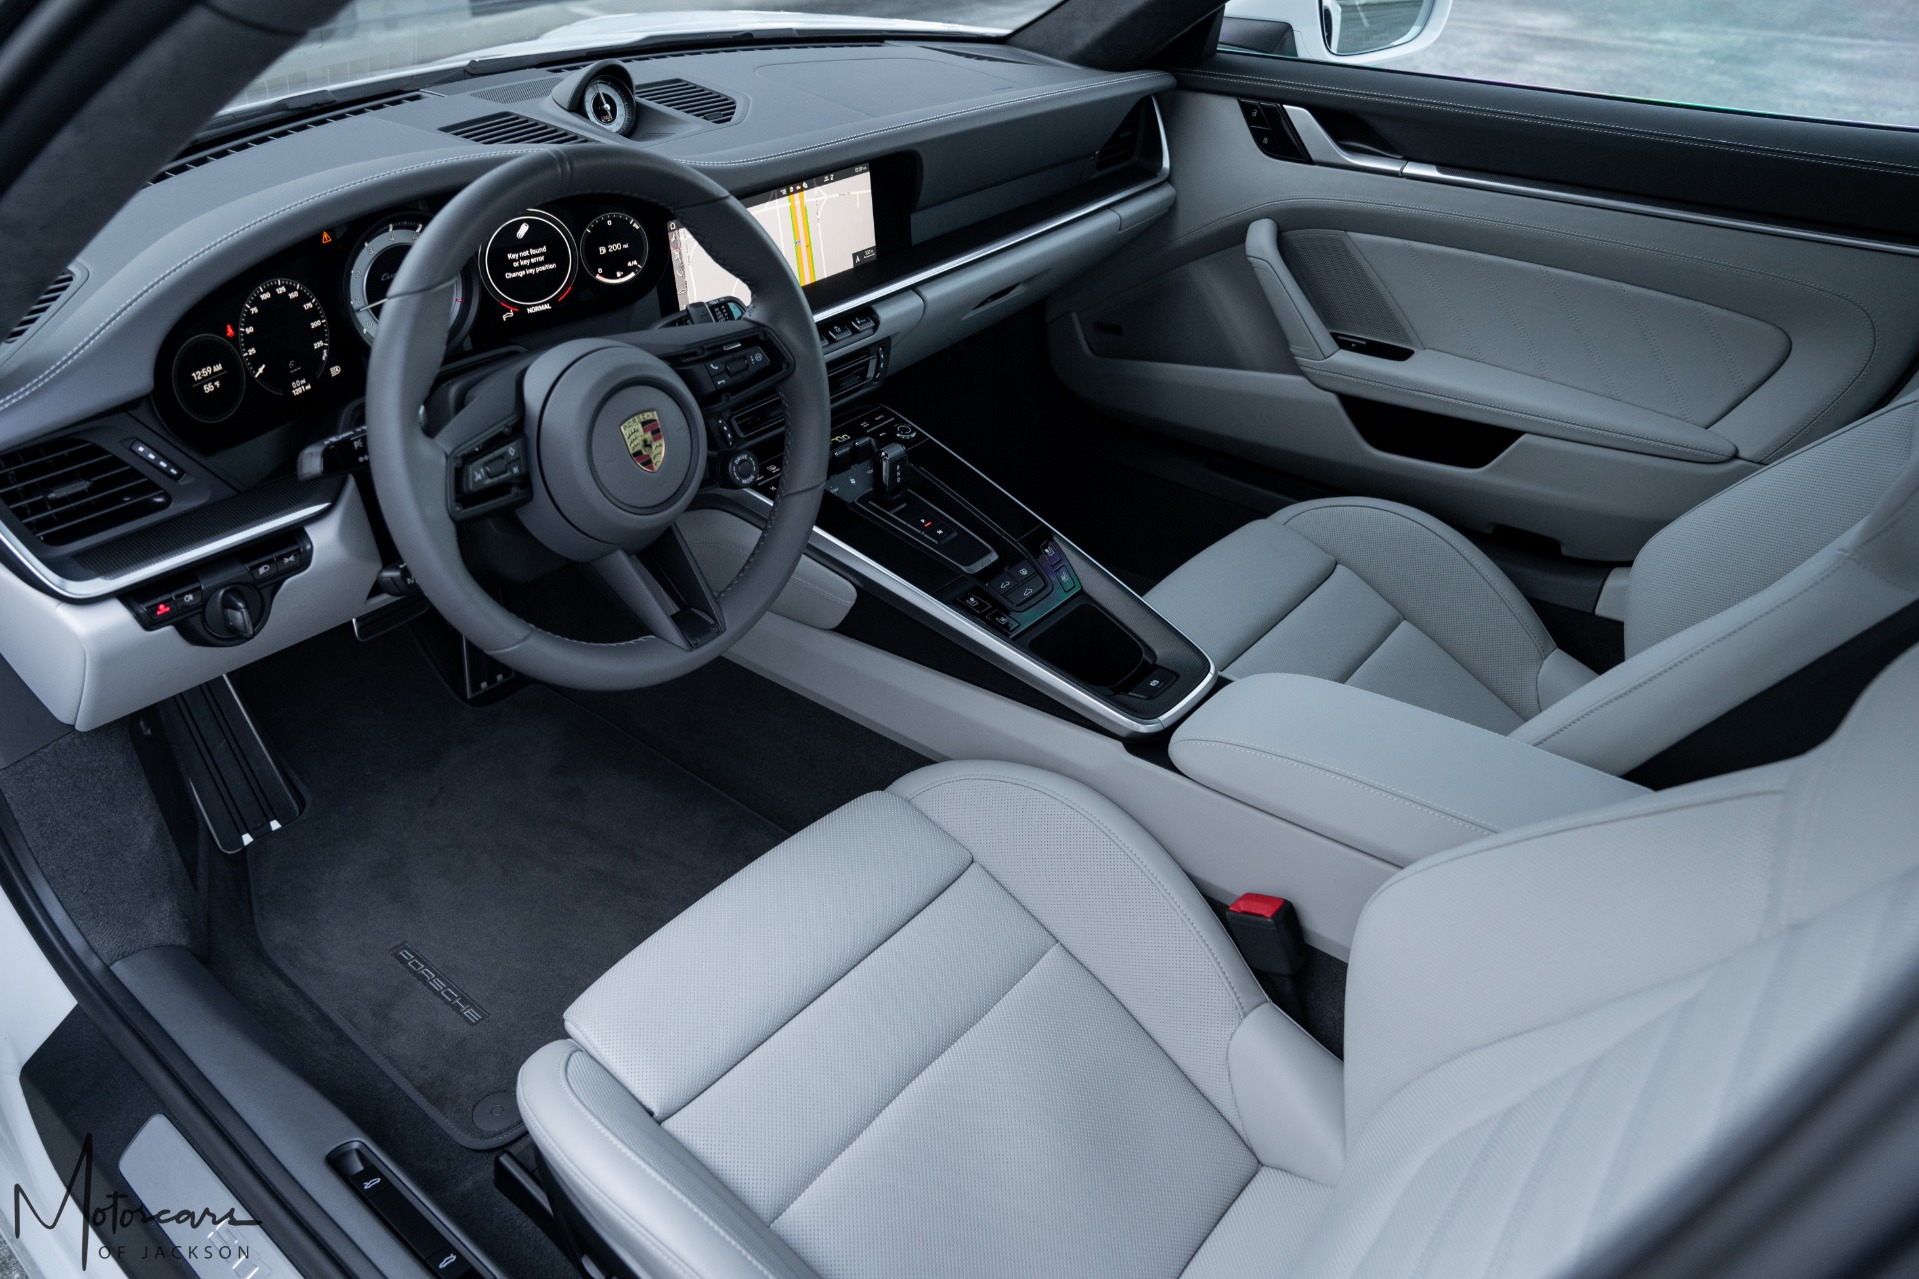 Used-2021-Porsche-911-Turbo-S-for-sale-Jackson-MS